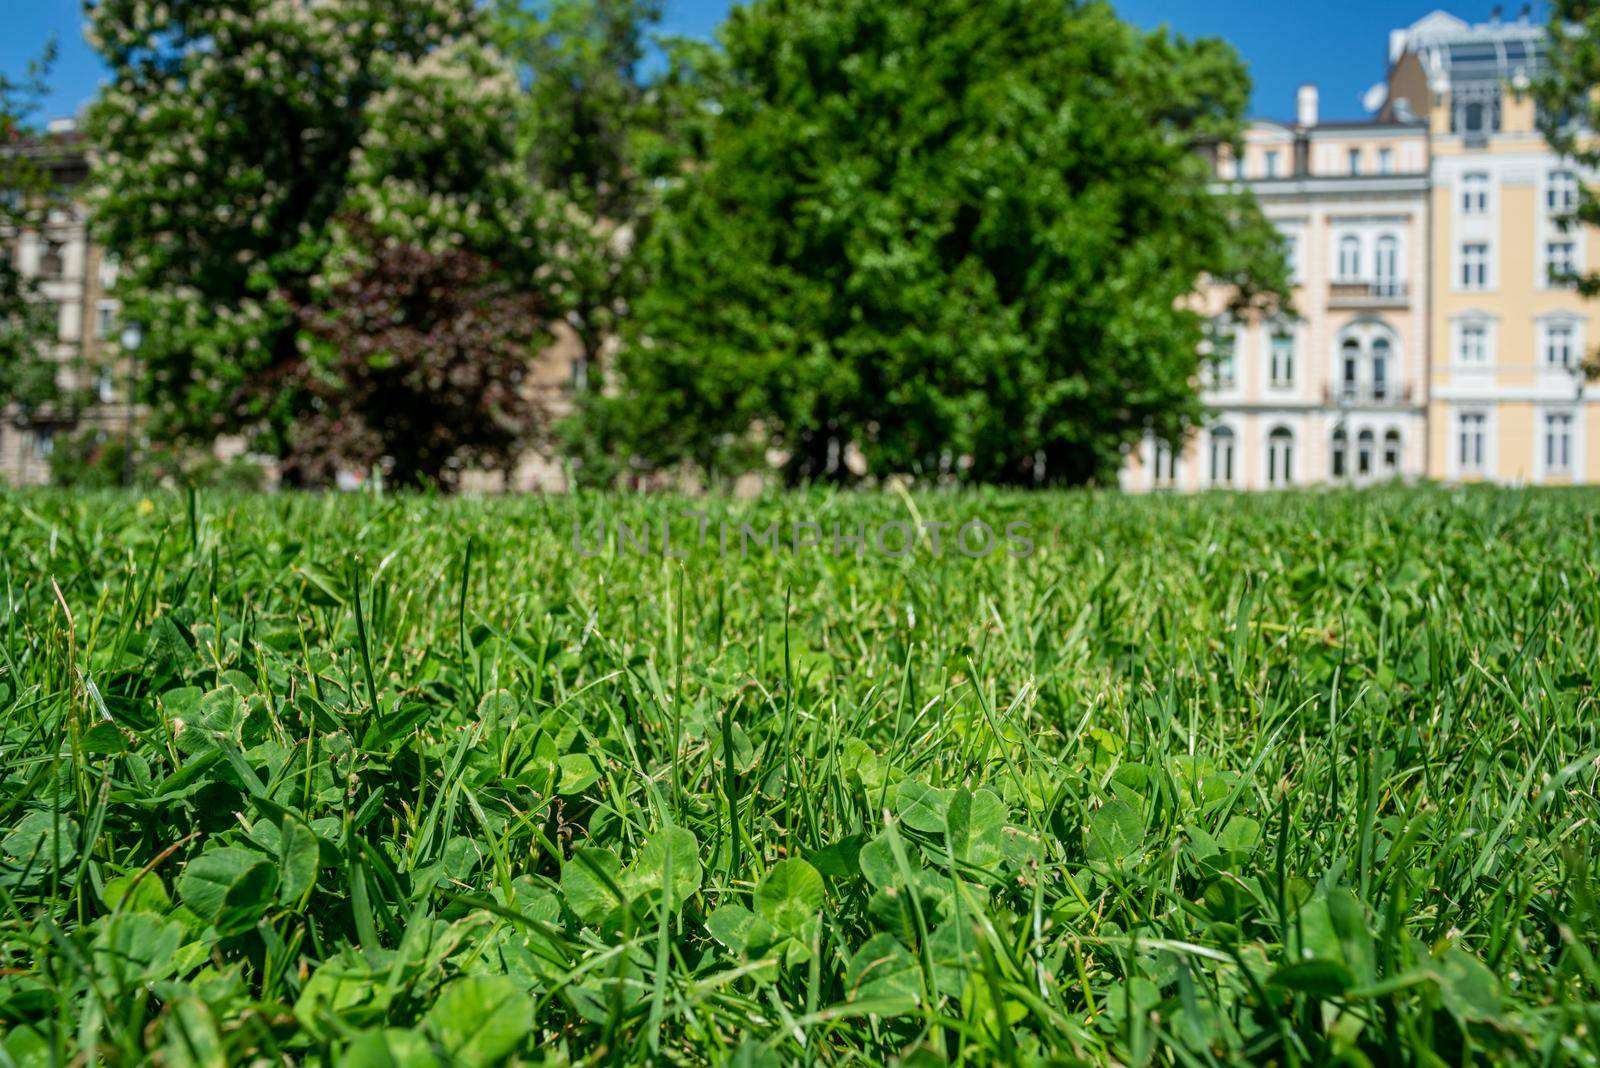 Grass Green Clovers Park Urban Europe Bulgaria Sunny Day by vilevi